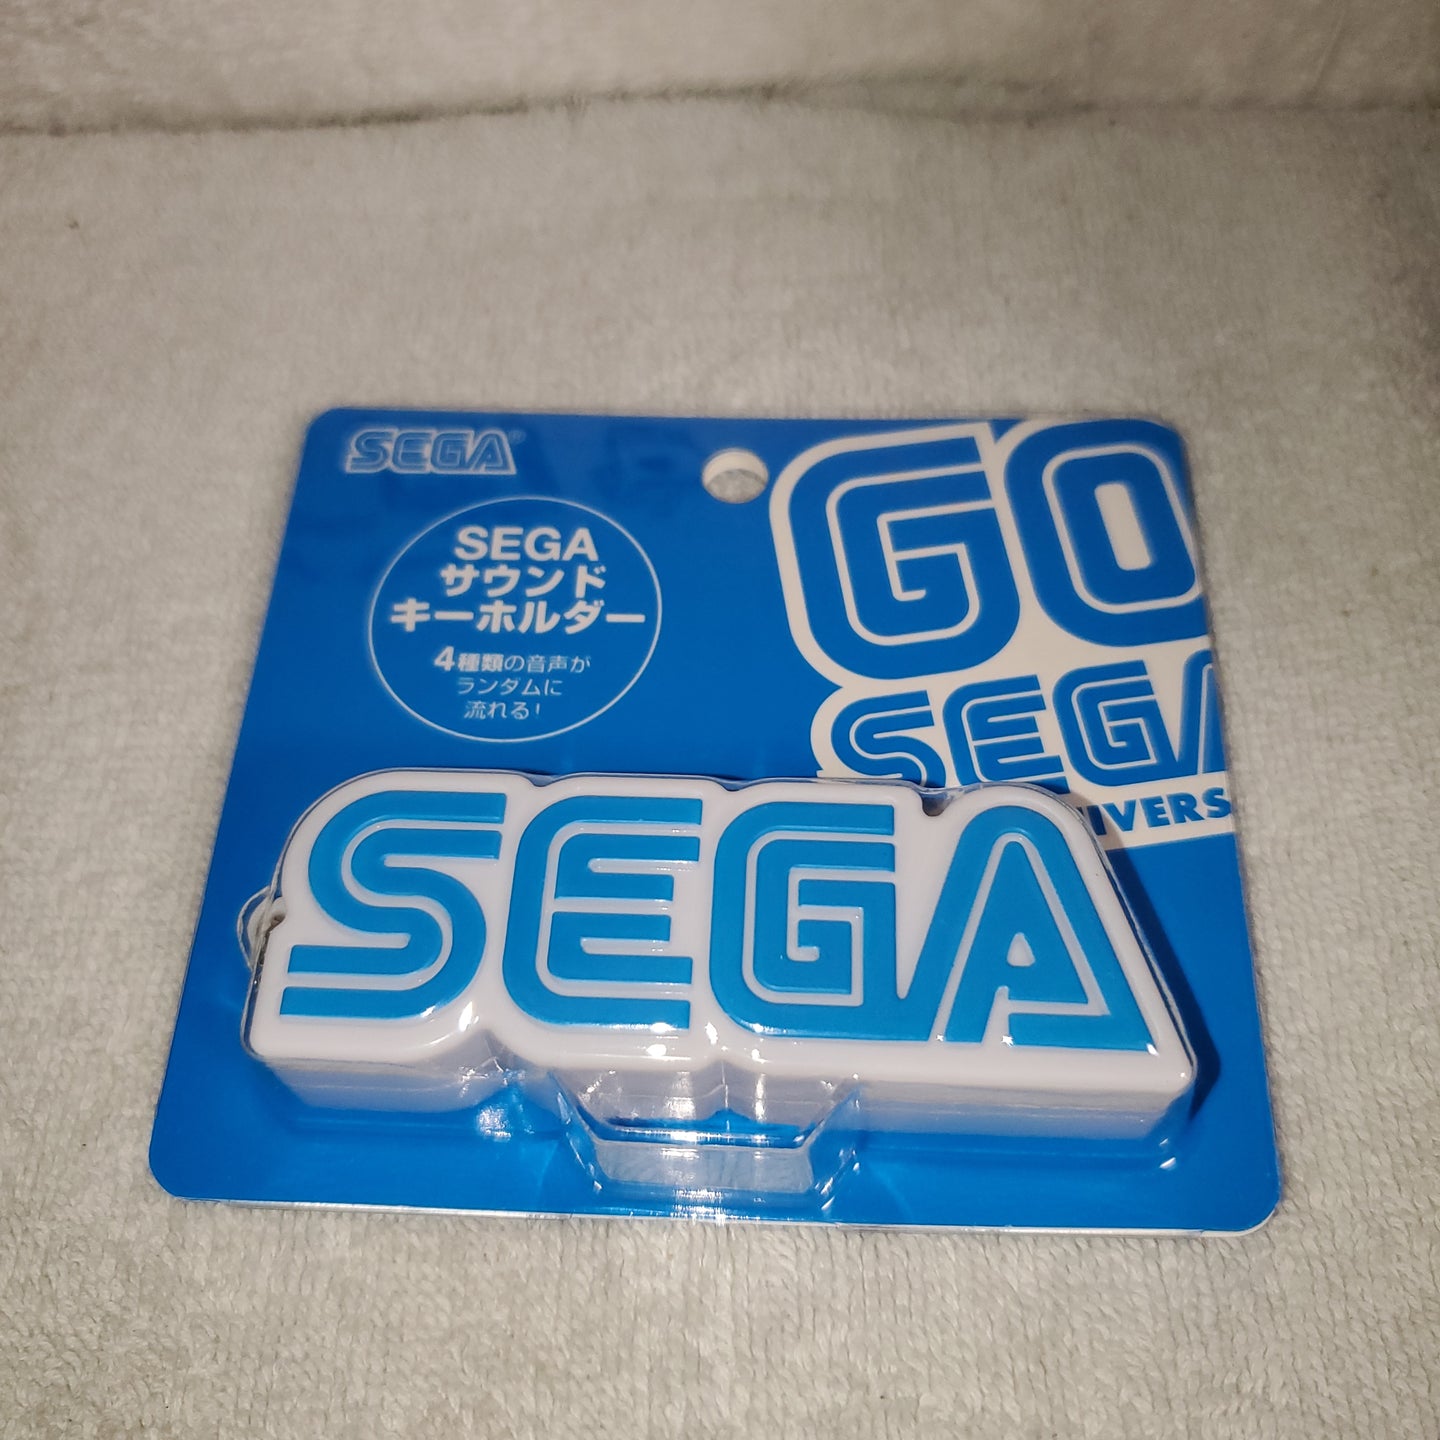 Sega ~ Sound key chain  - toy action figure model